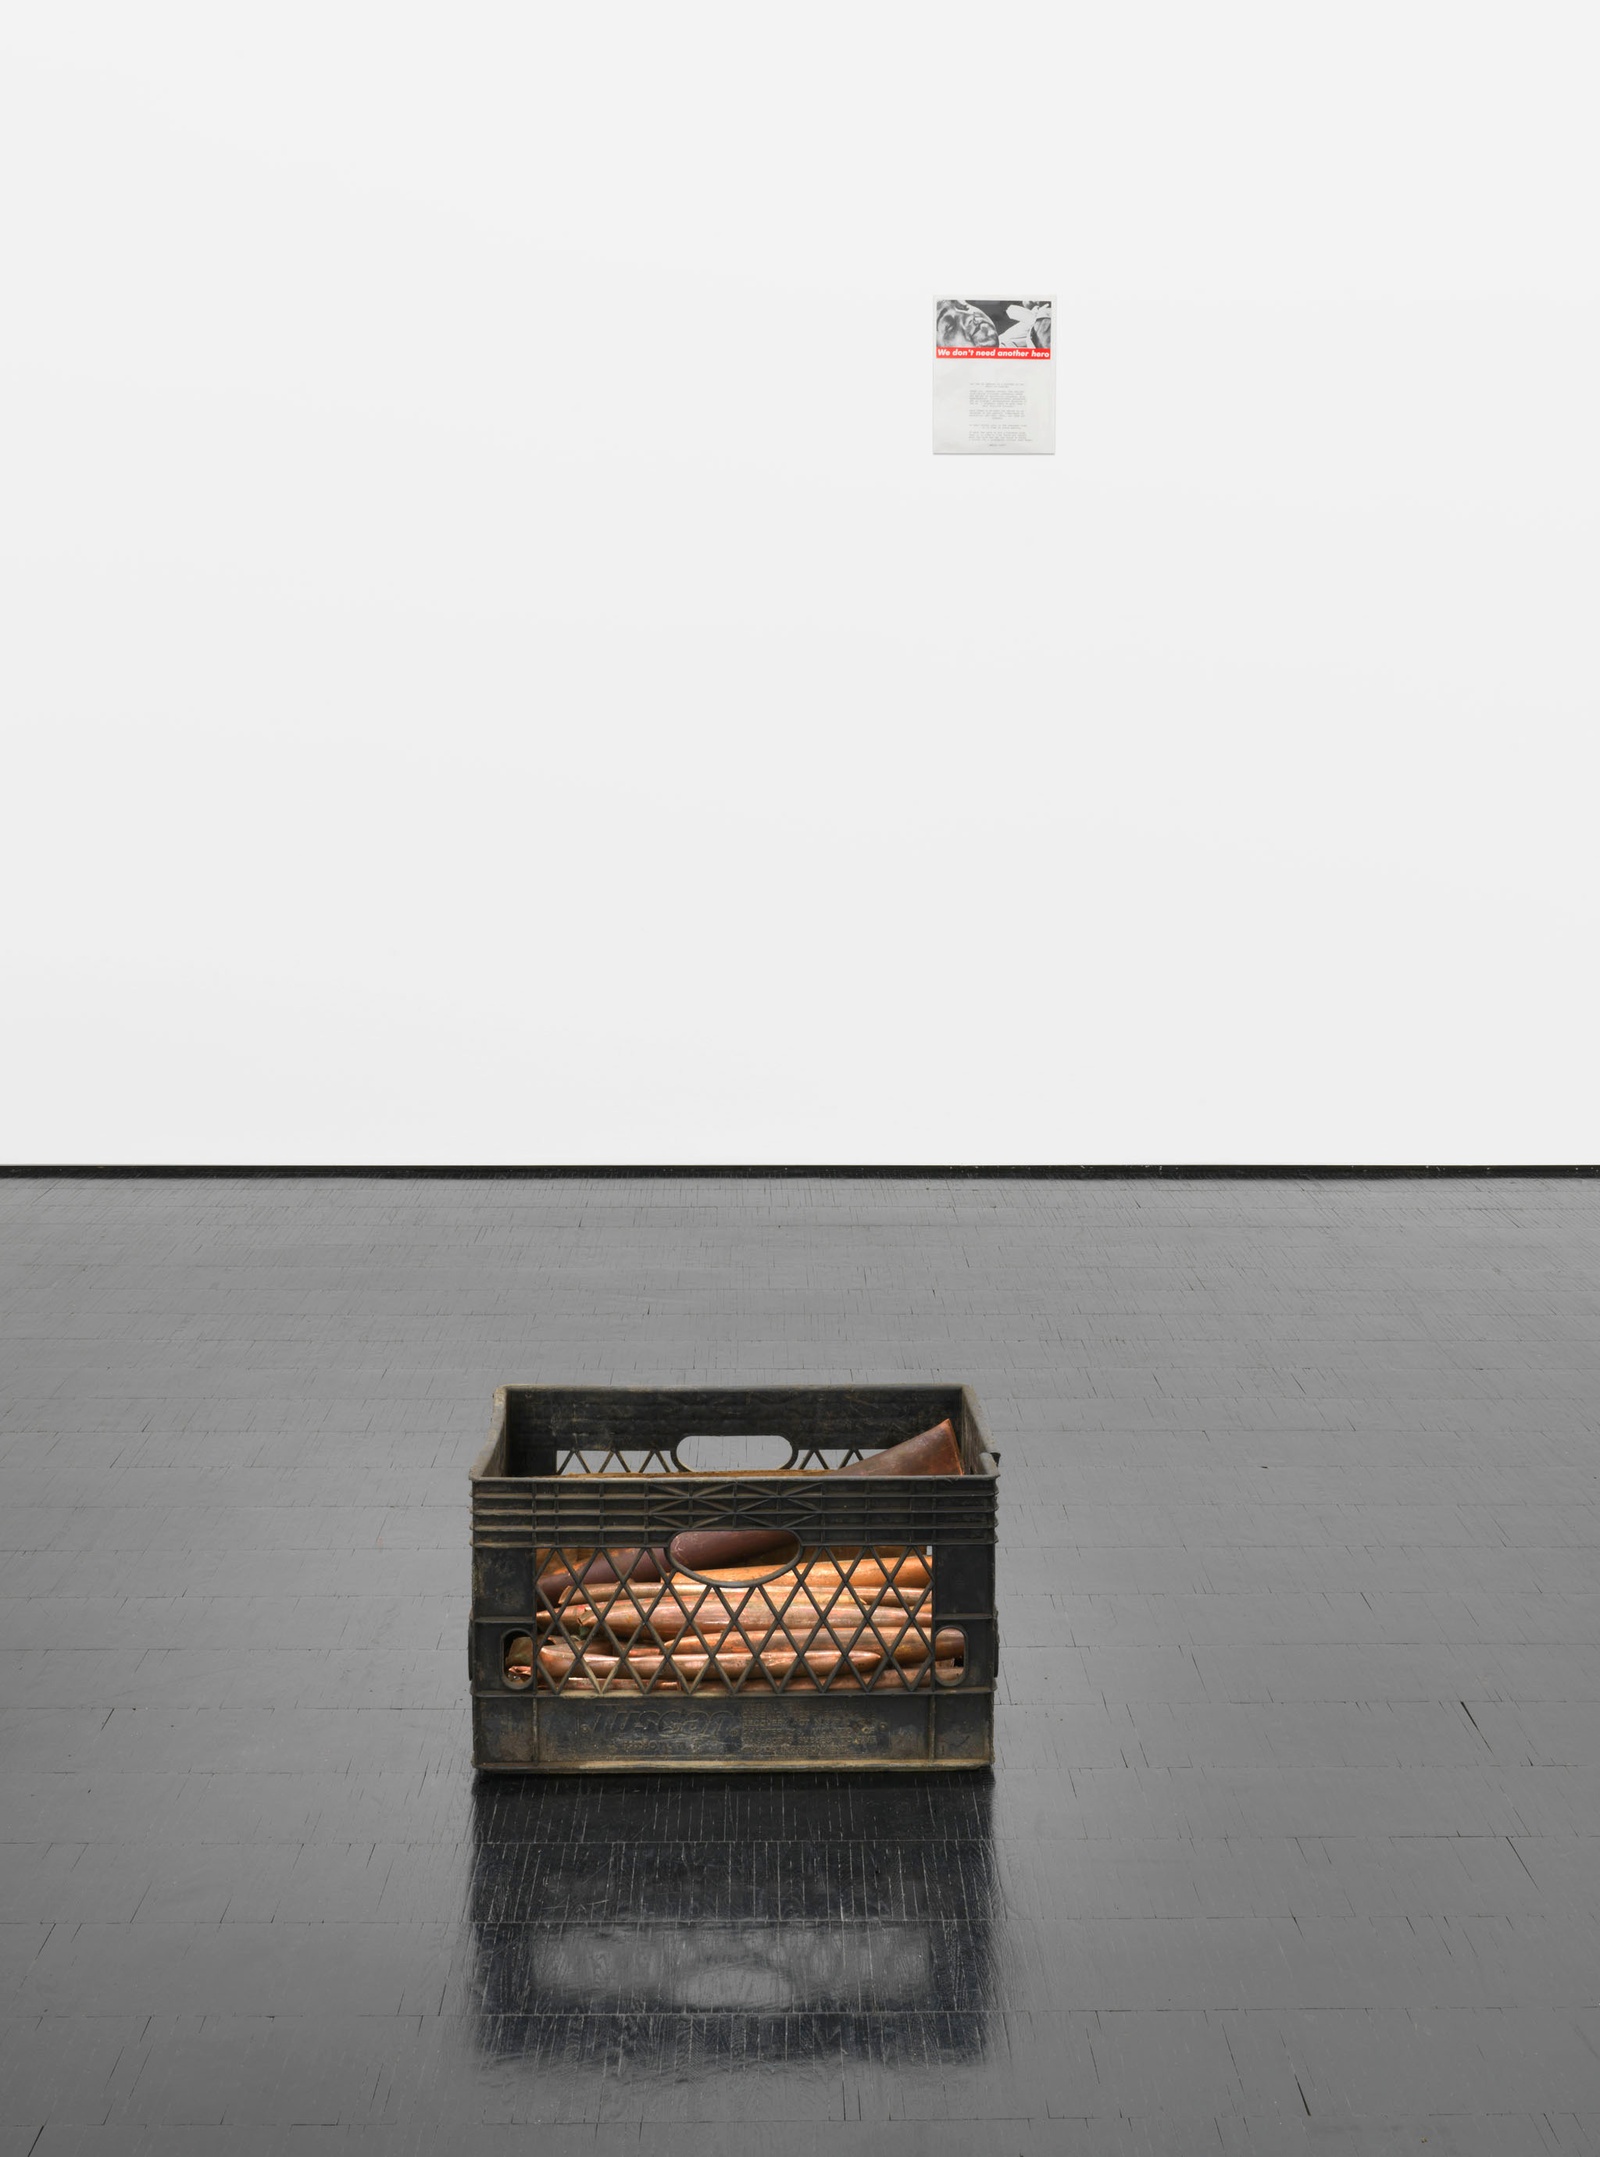 Cameron Rowland. Loot, 2018. Cut copper tube, cardboard box, crate. 27 x 48 x 33 cm. rental